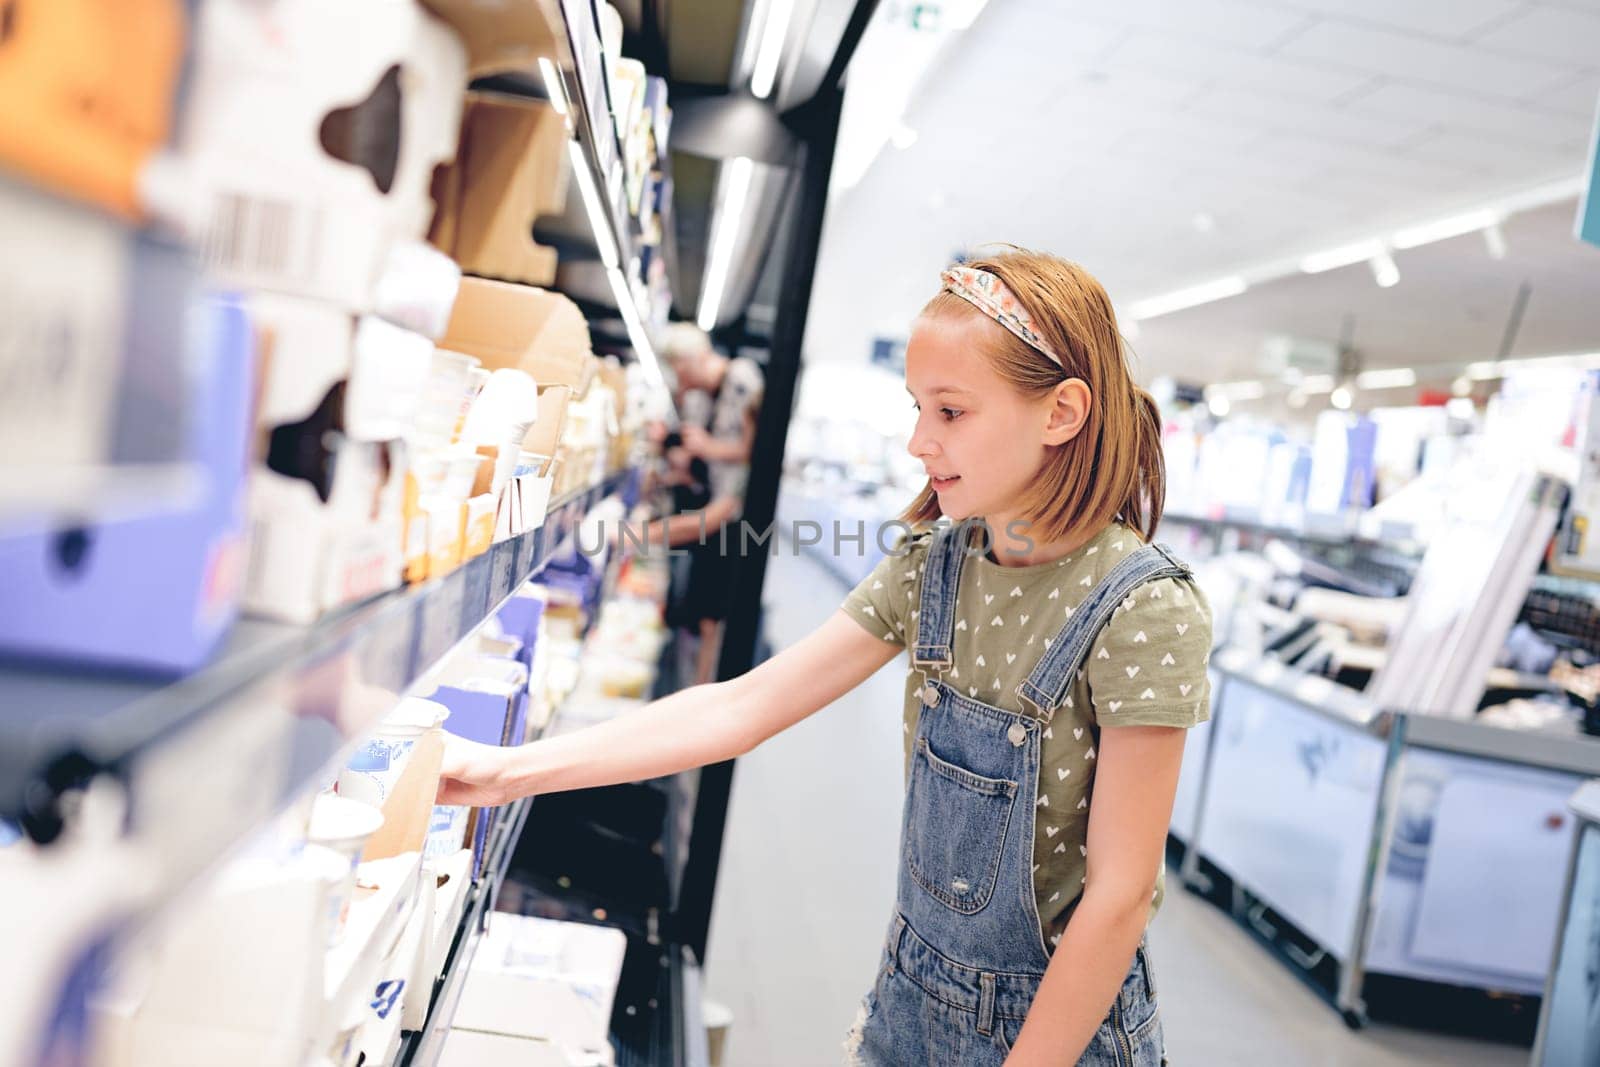 Pretty girl child shopping in supermarket by GekaSkr